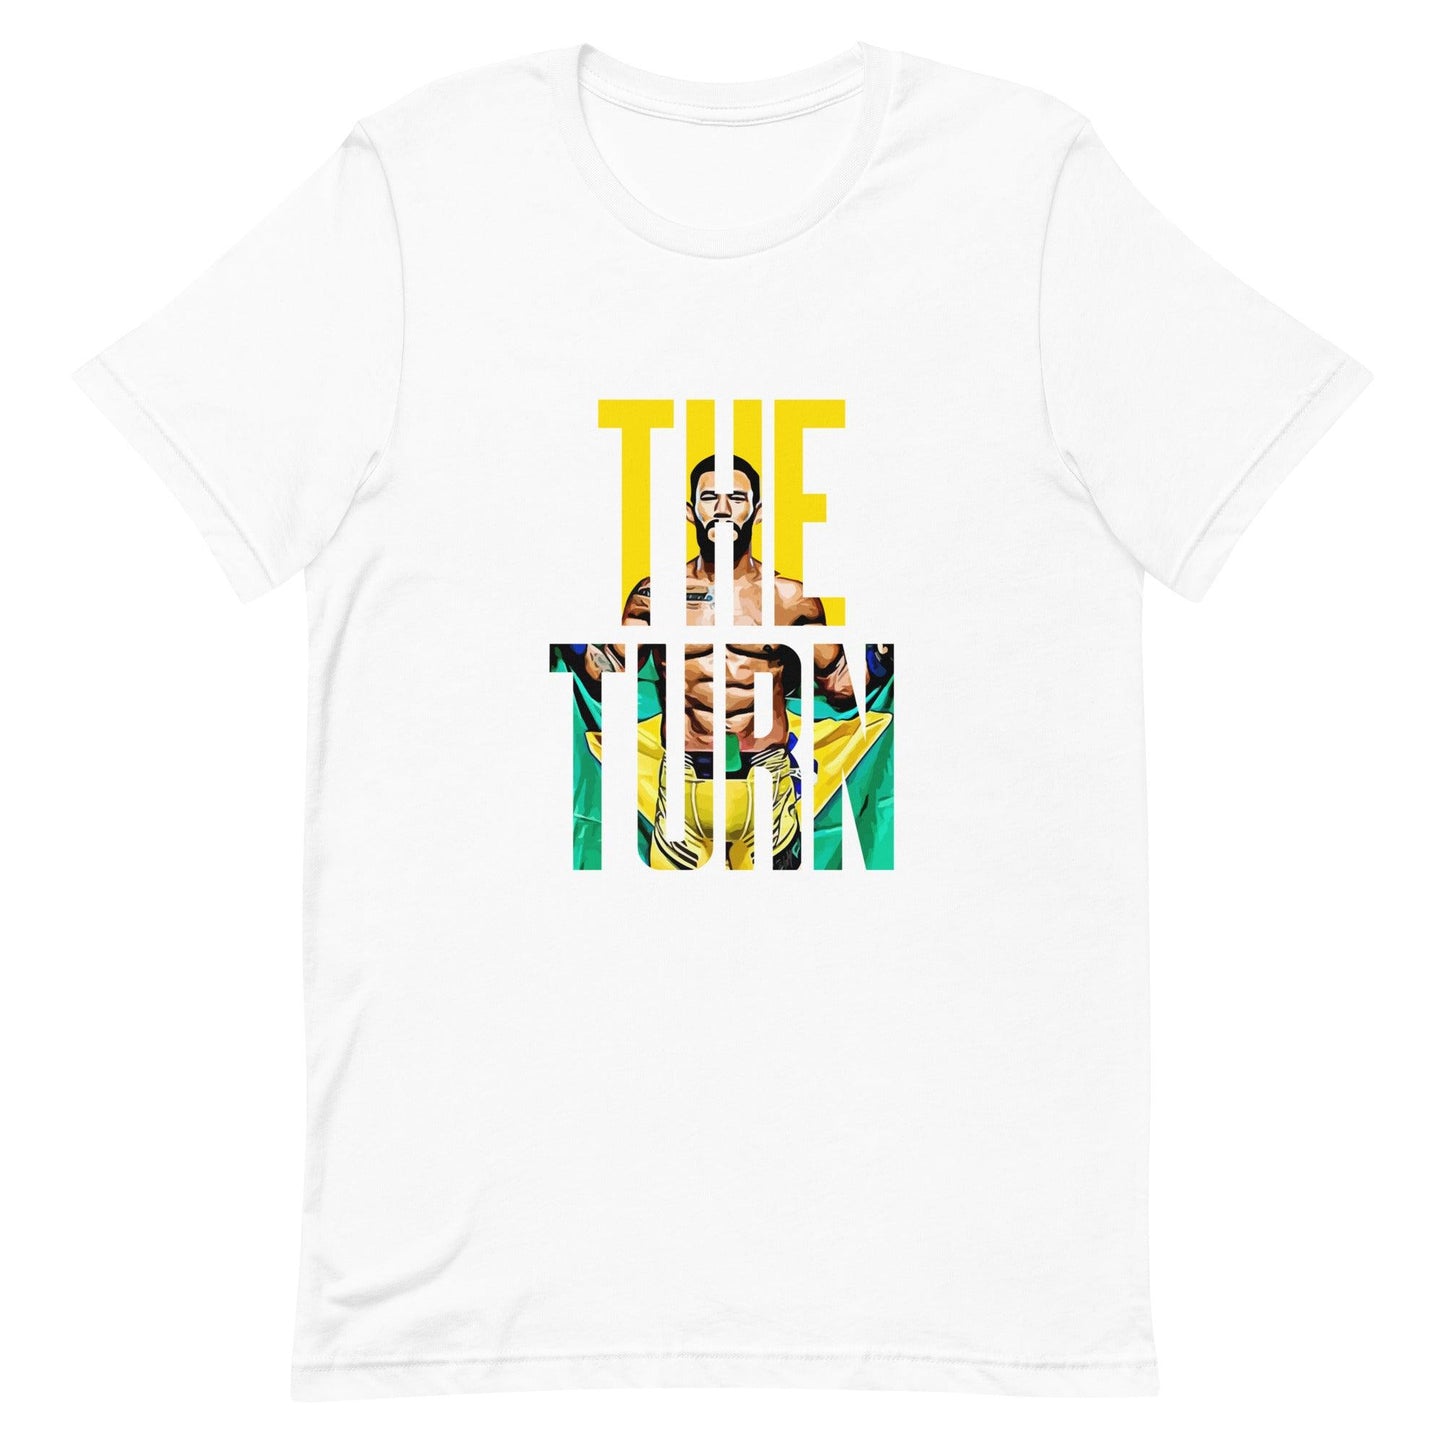 Rafael Alves "The Turn" t-shirt - Fan Arch